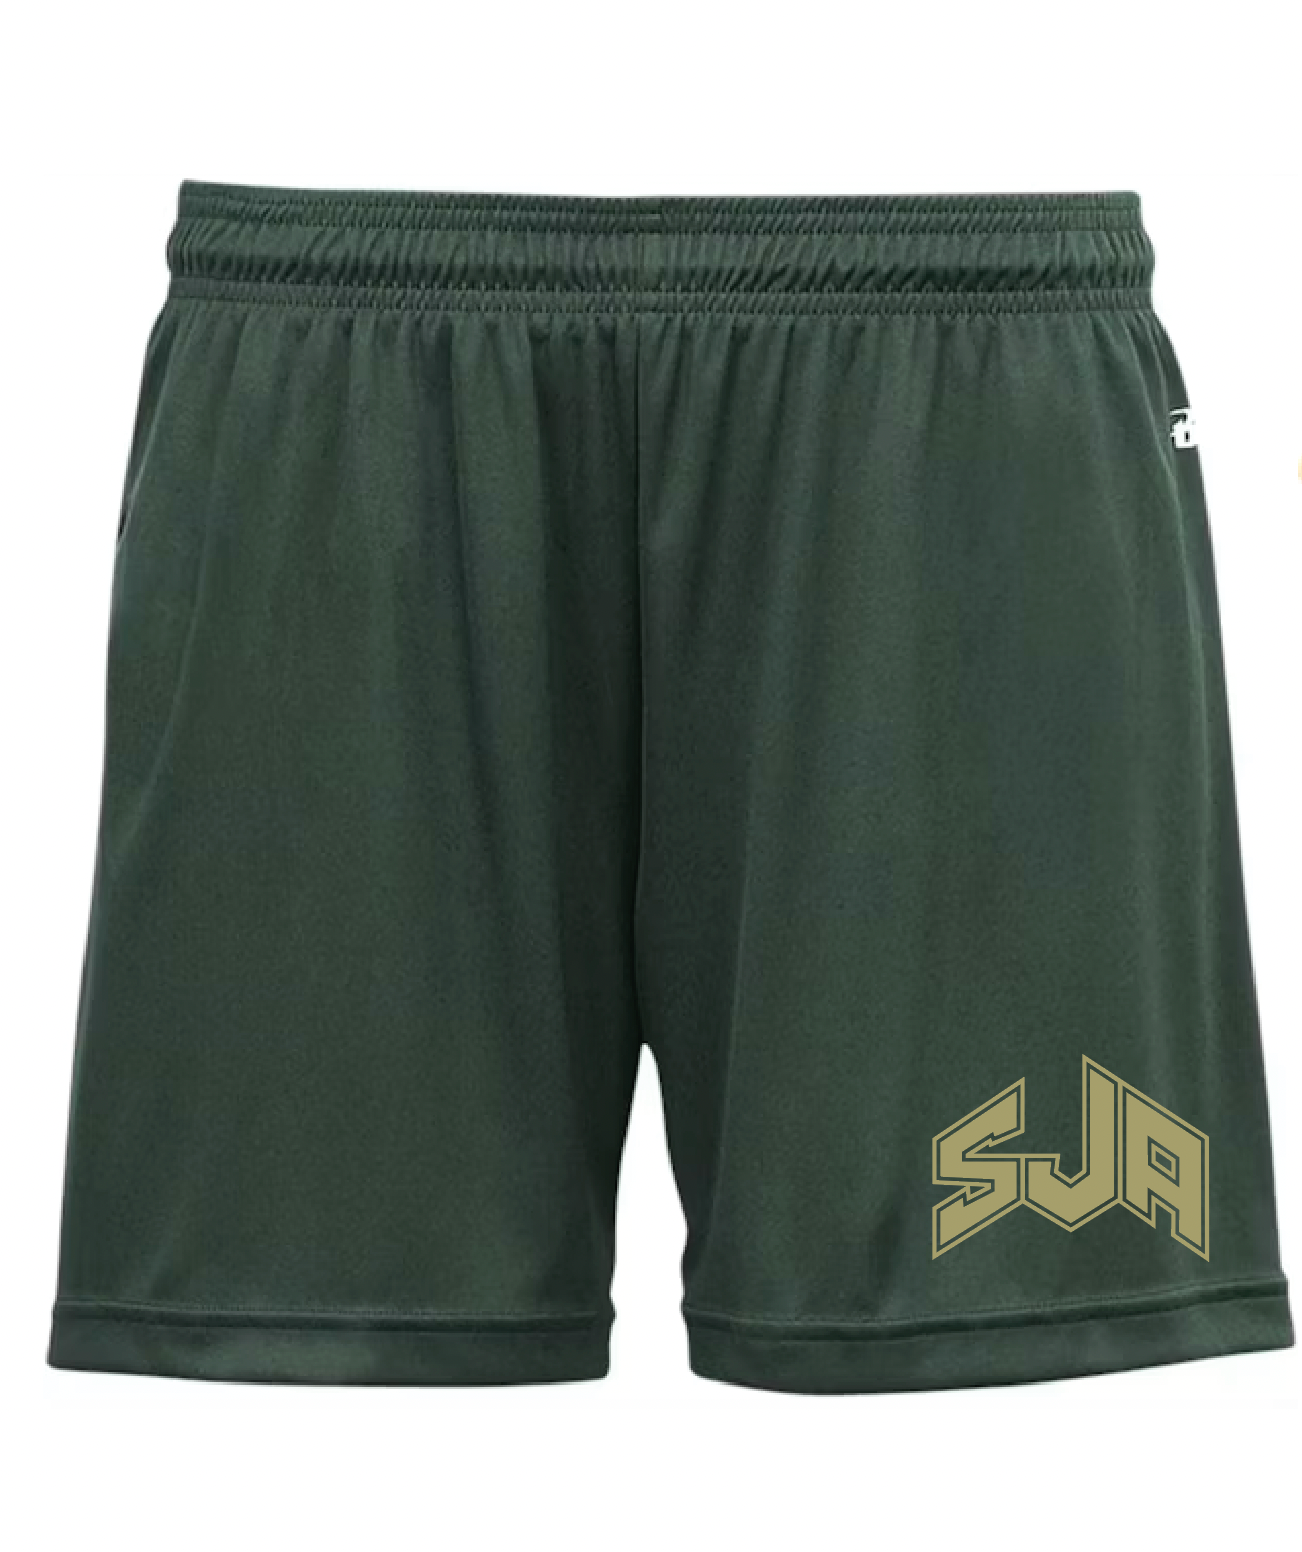 SJA PE Shorts (New Styles)